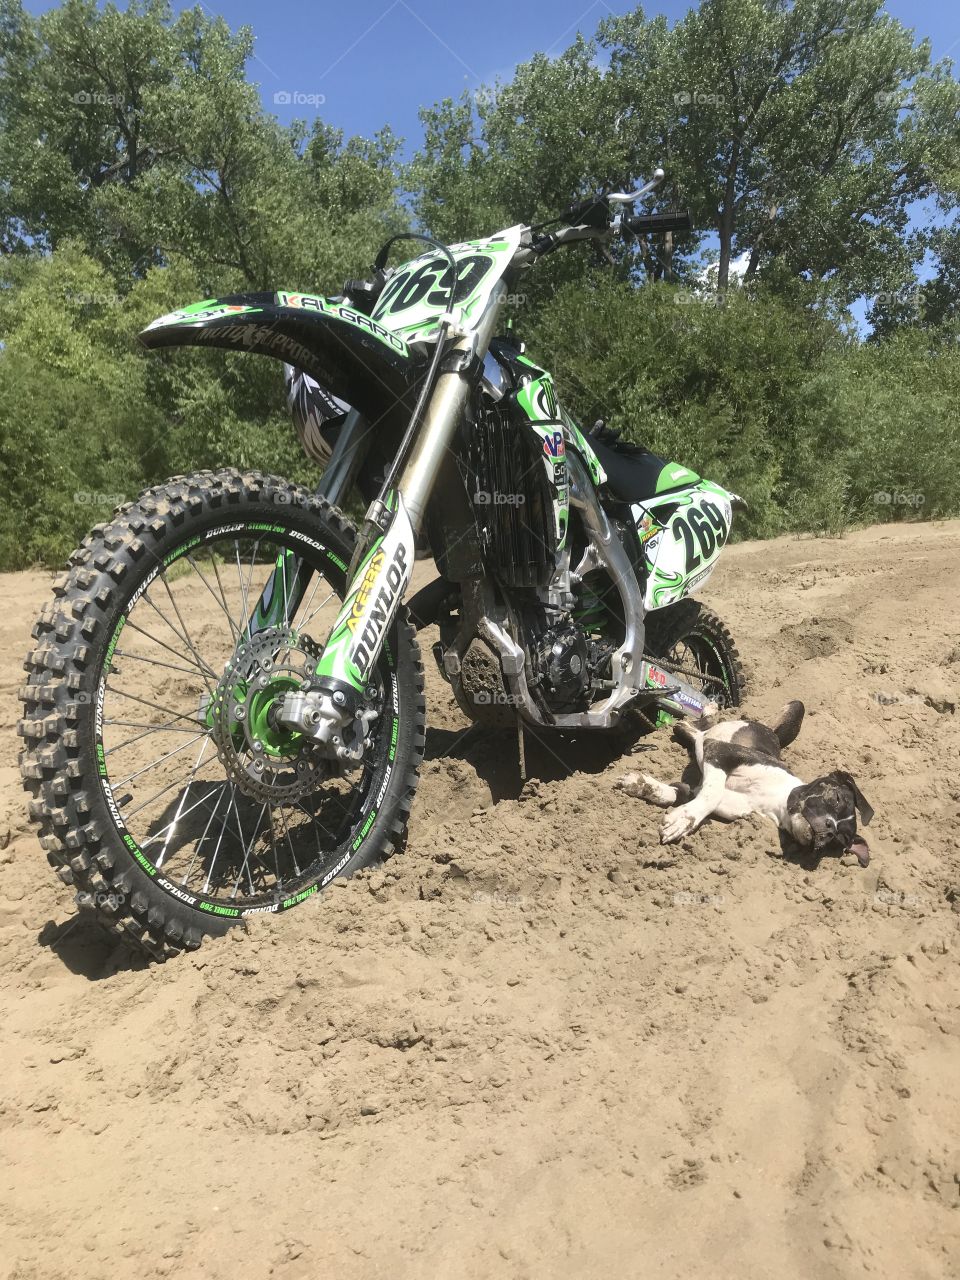 Dirt bike dog